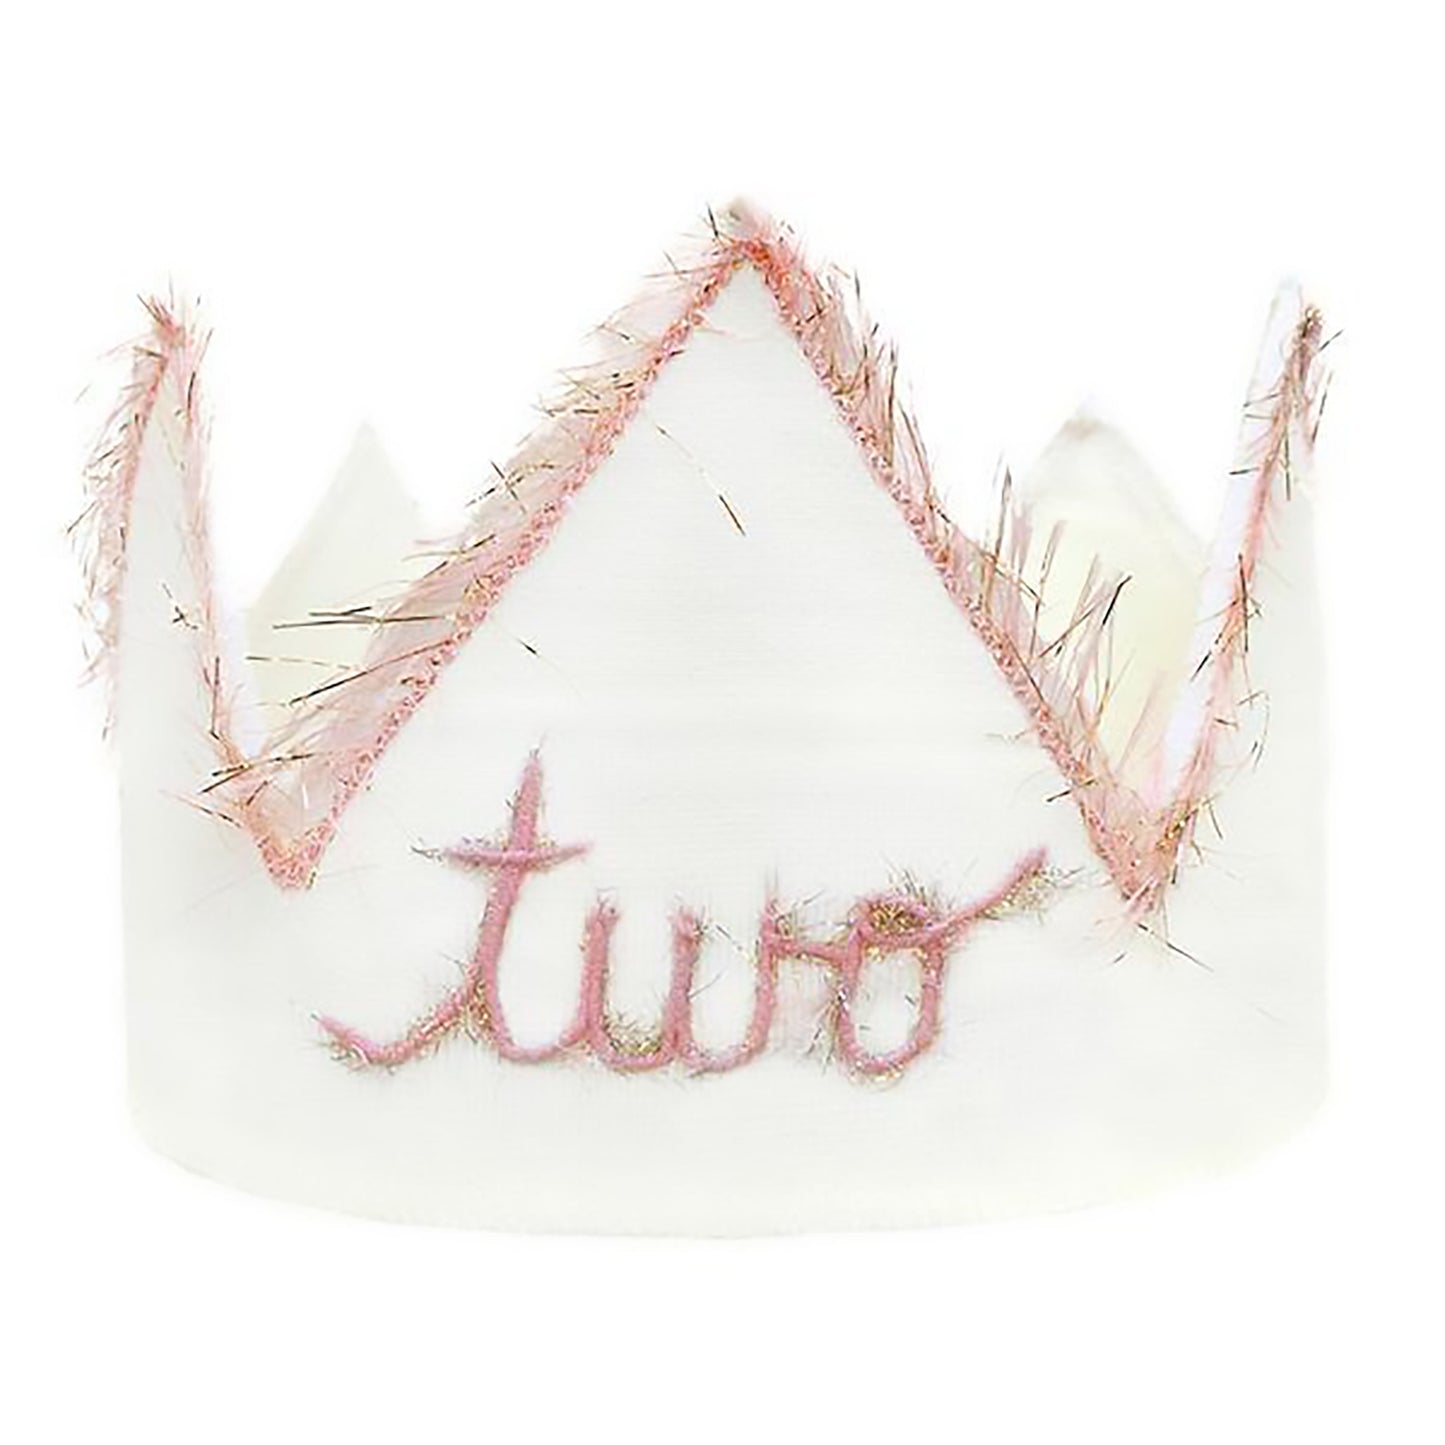 "Two" #10PG Blush Pink/Gold EL w/#10PG EL Crown